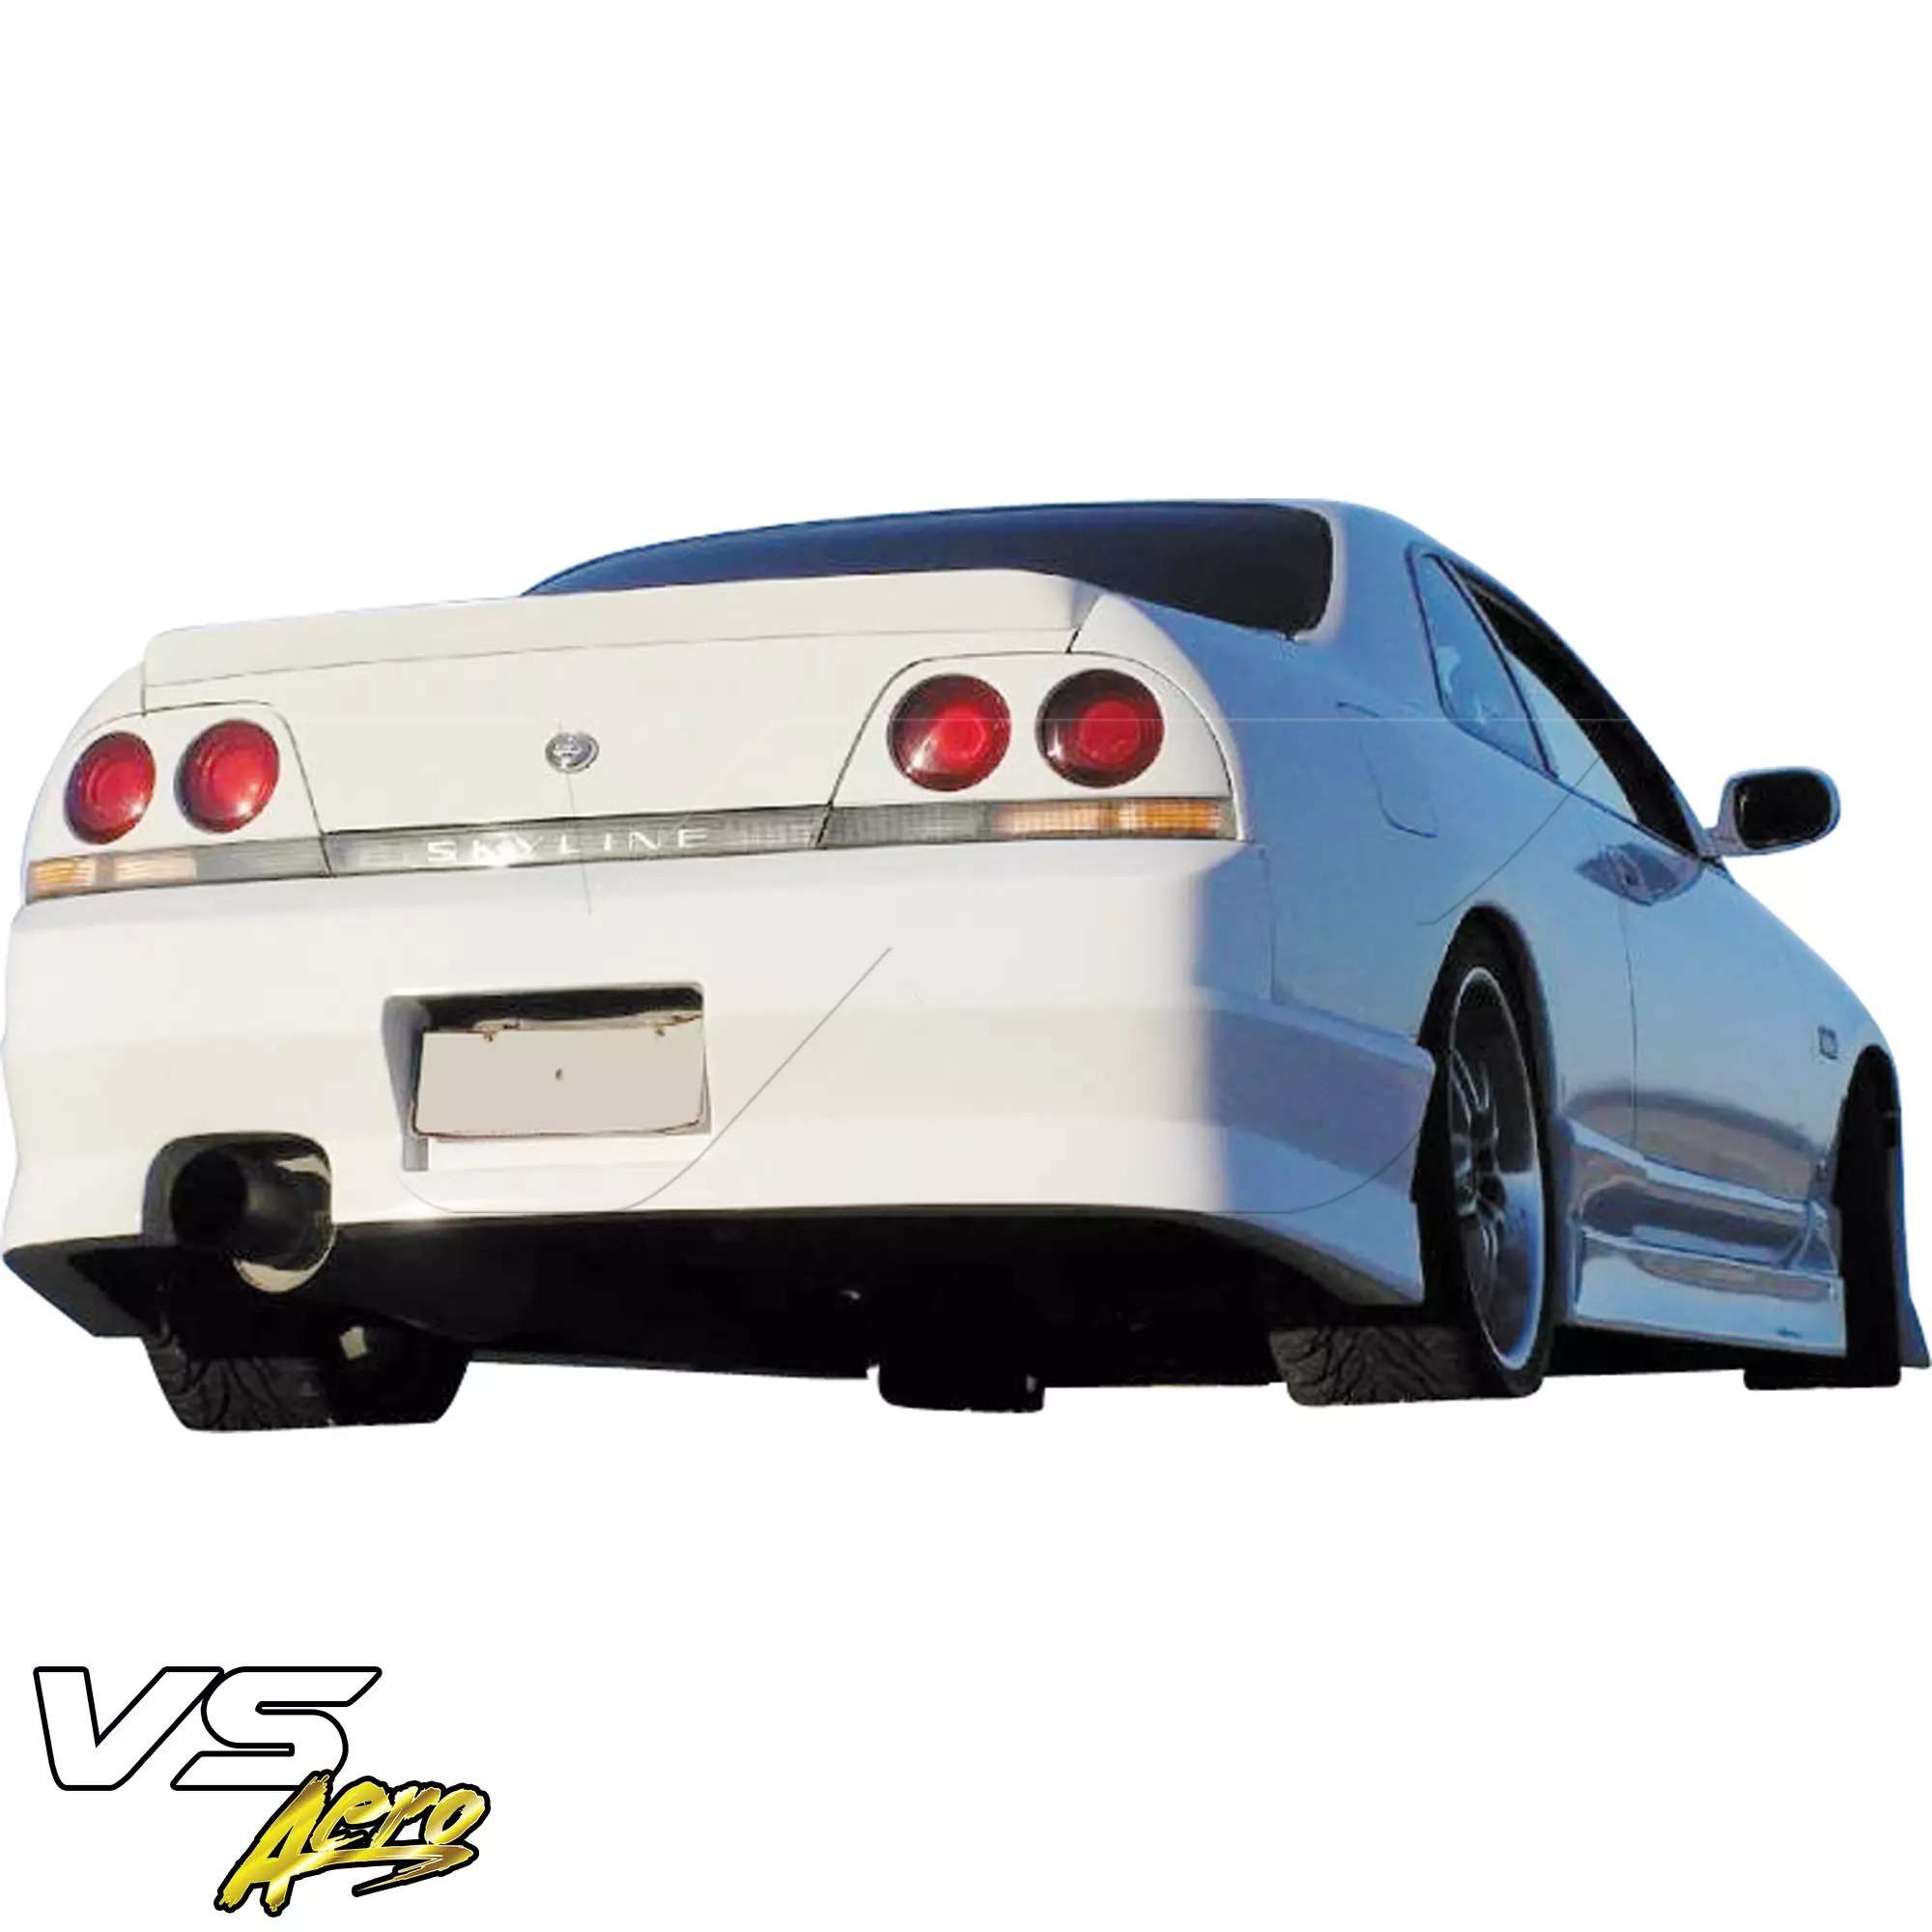 VSaero FRP MSPO v2 Body Kit 4pc > Nissan Skyline R33 GTS 1995-1998 > 2dr Coupe - Image 31